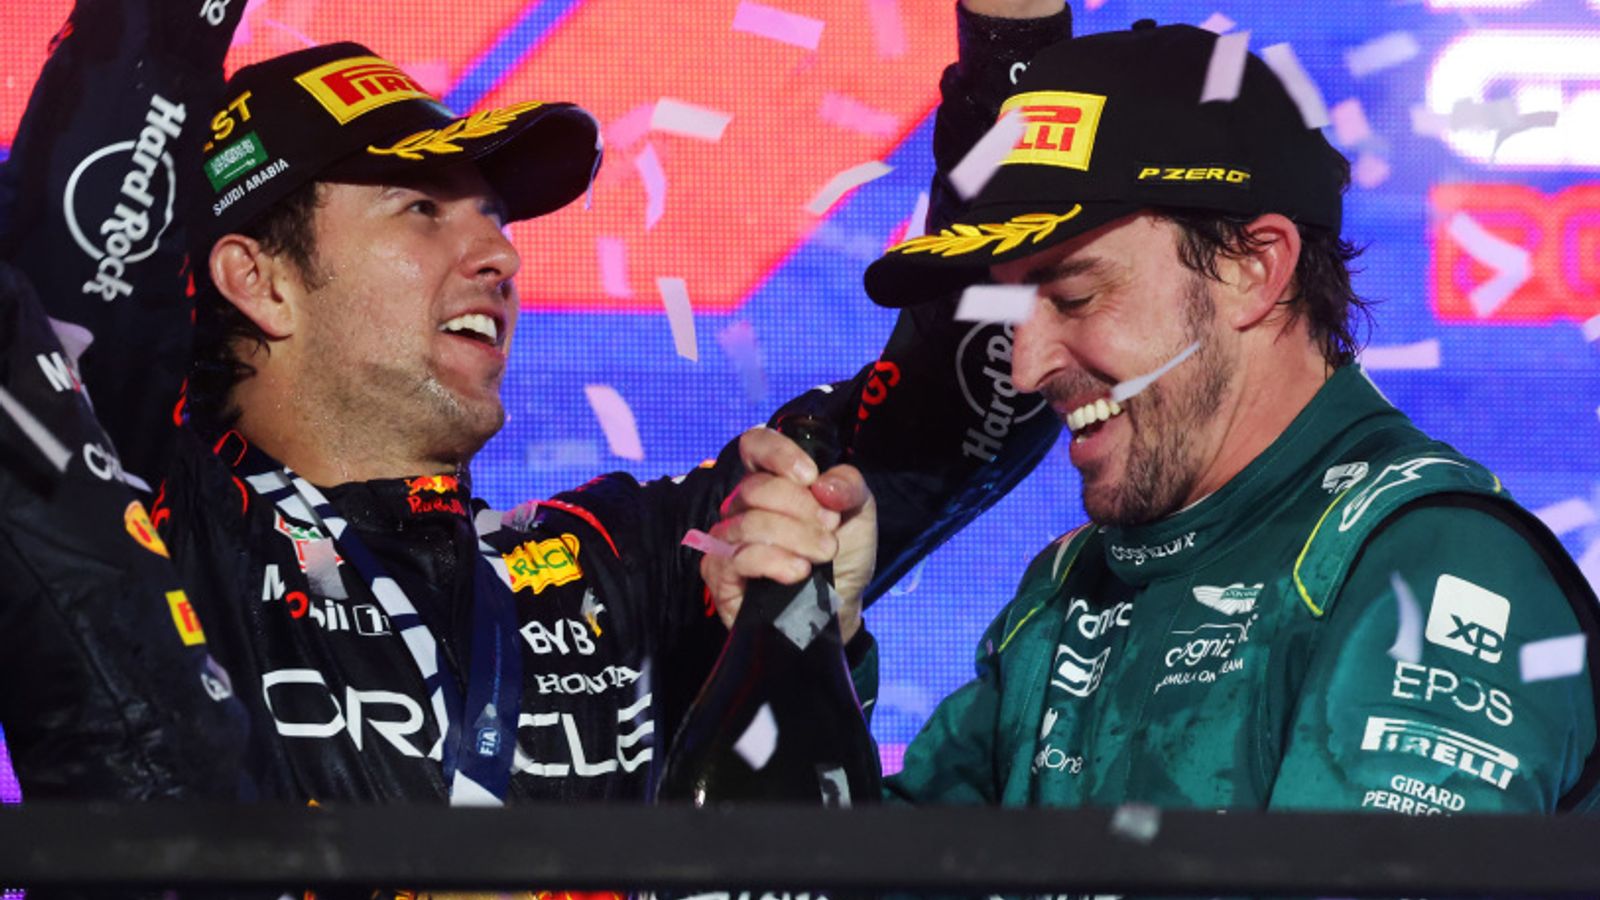 Martin Brundle on Saudi Arabian GP: Sergio Perez lands 'significant' blow on team-mate Max Verstappen